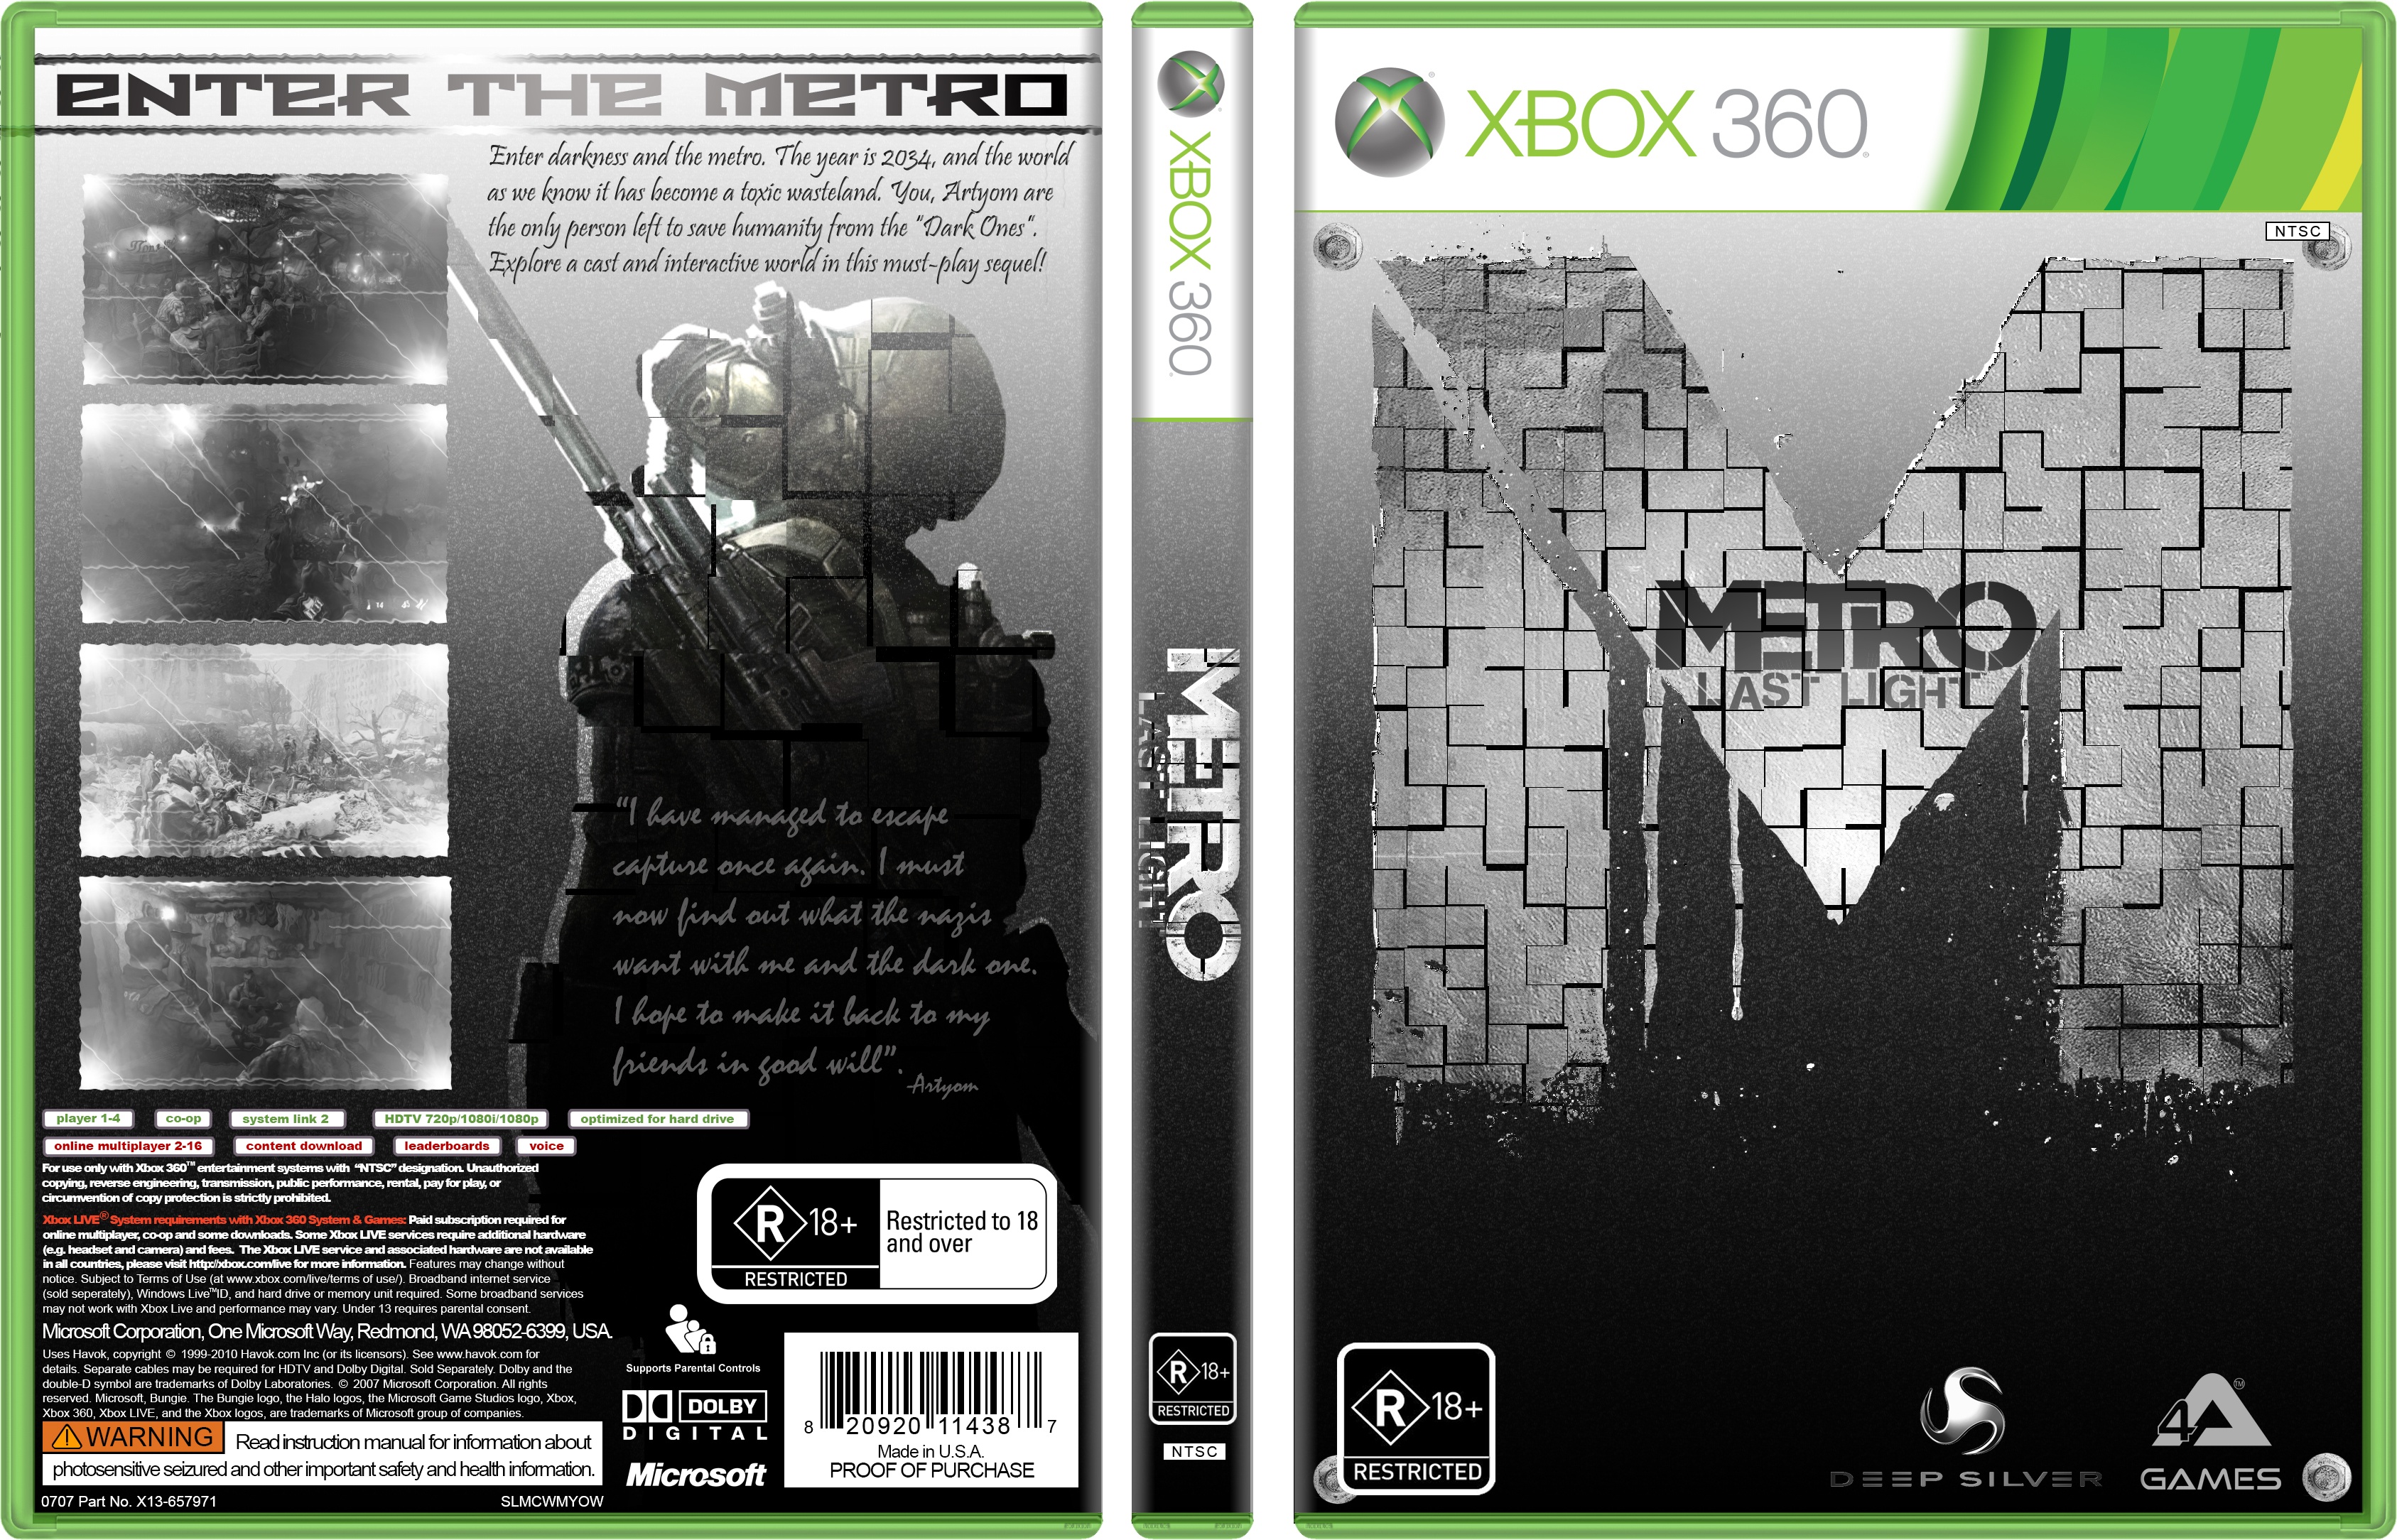 metro last light redux pc game cover art